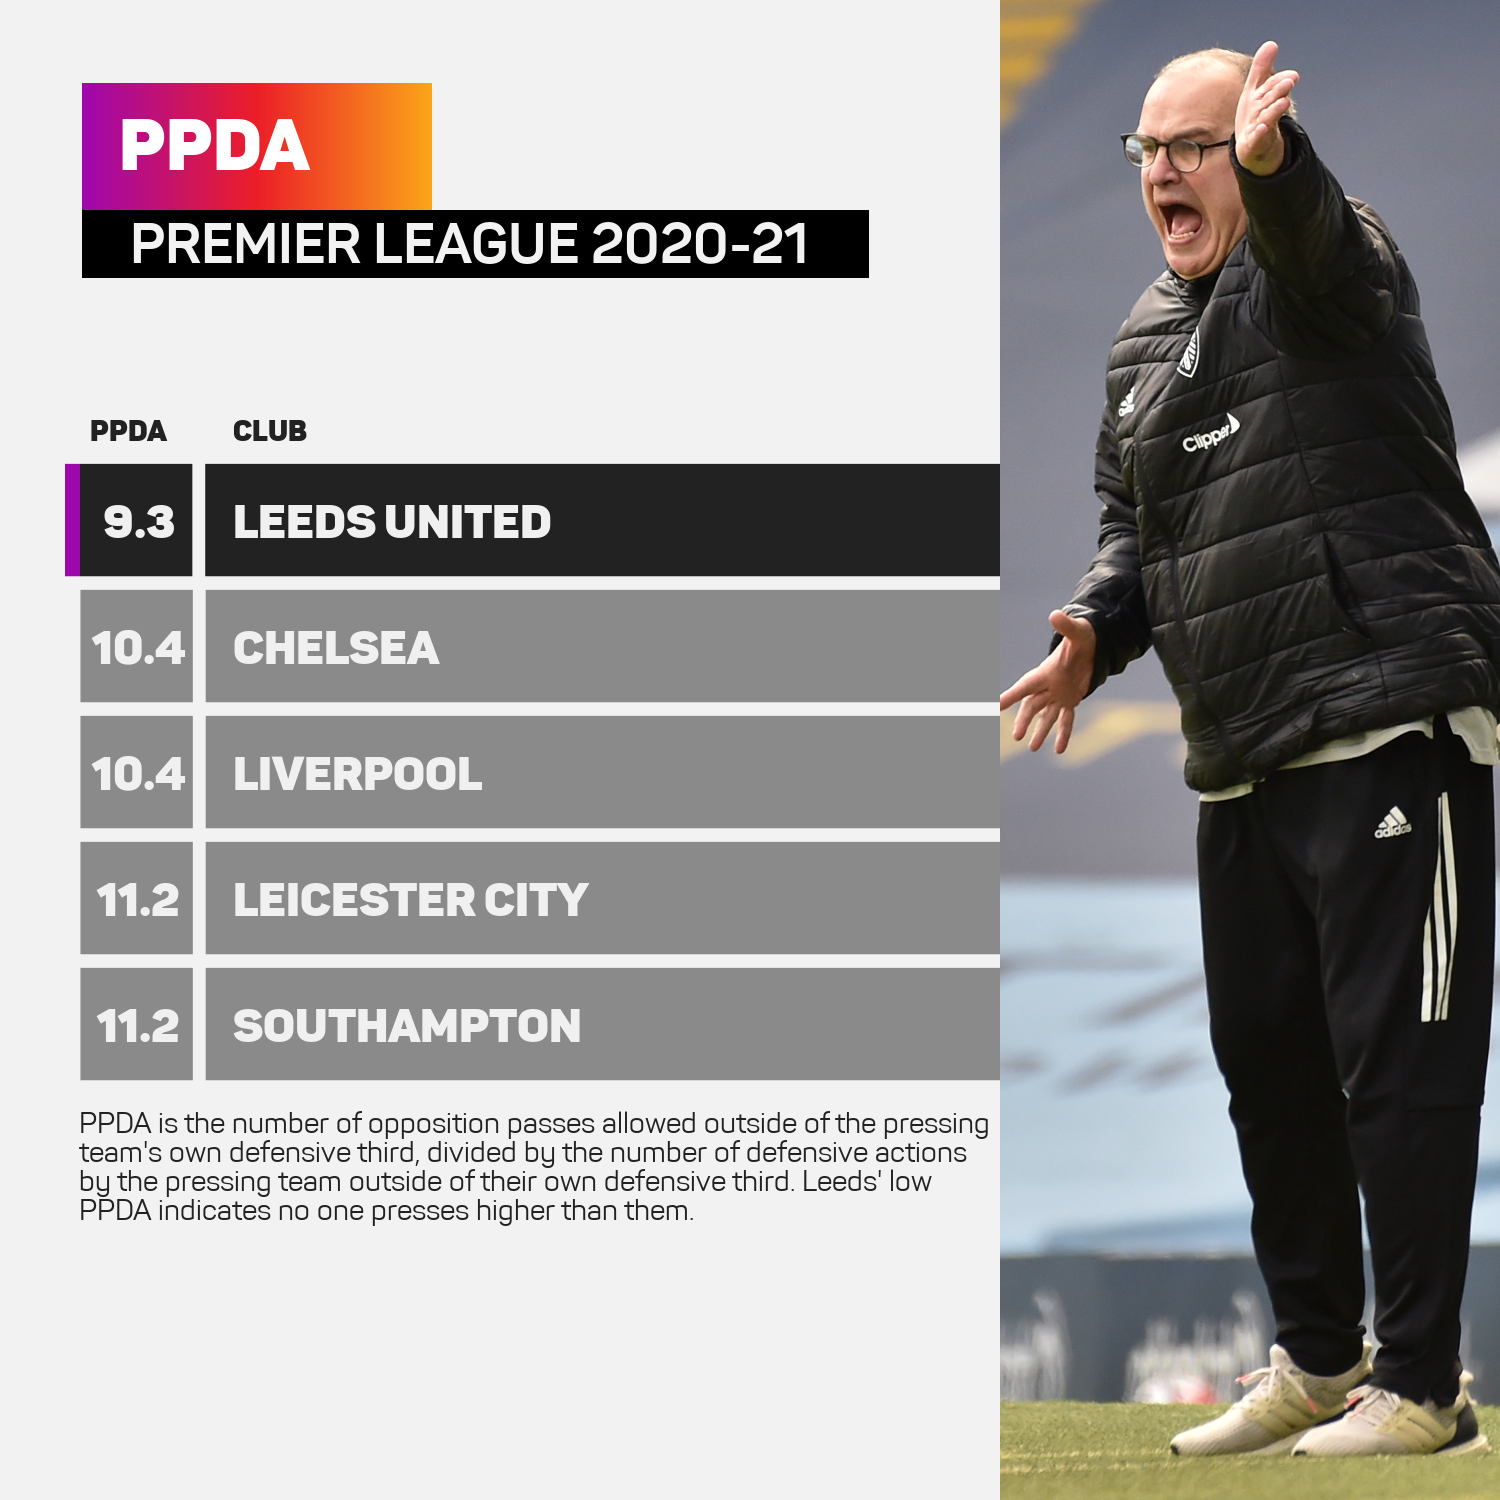 Leeds United were the most intense pressers in the Premier League last season